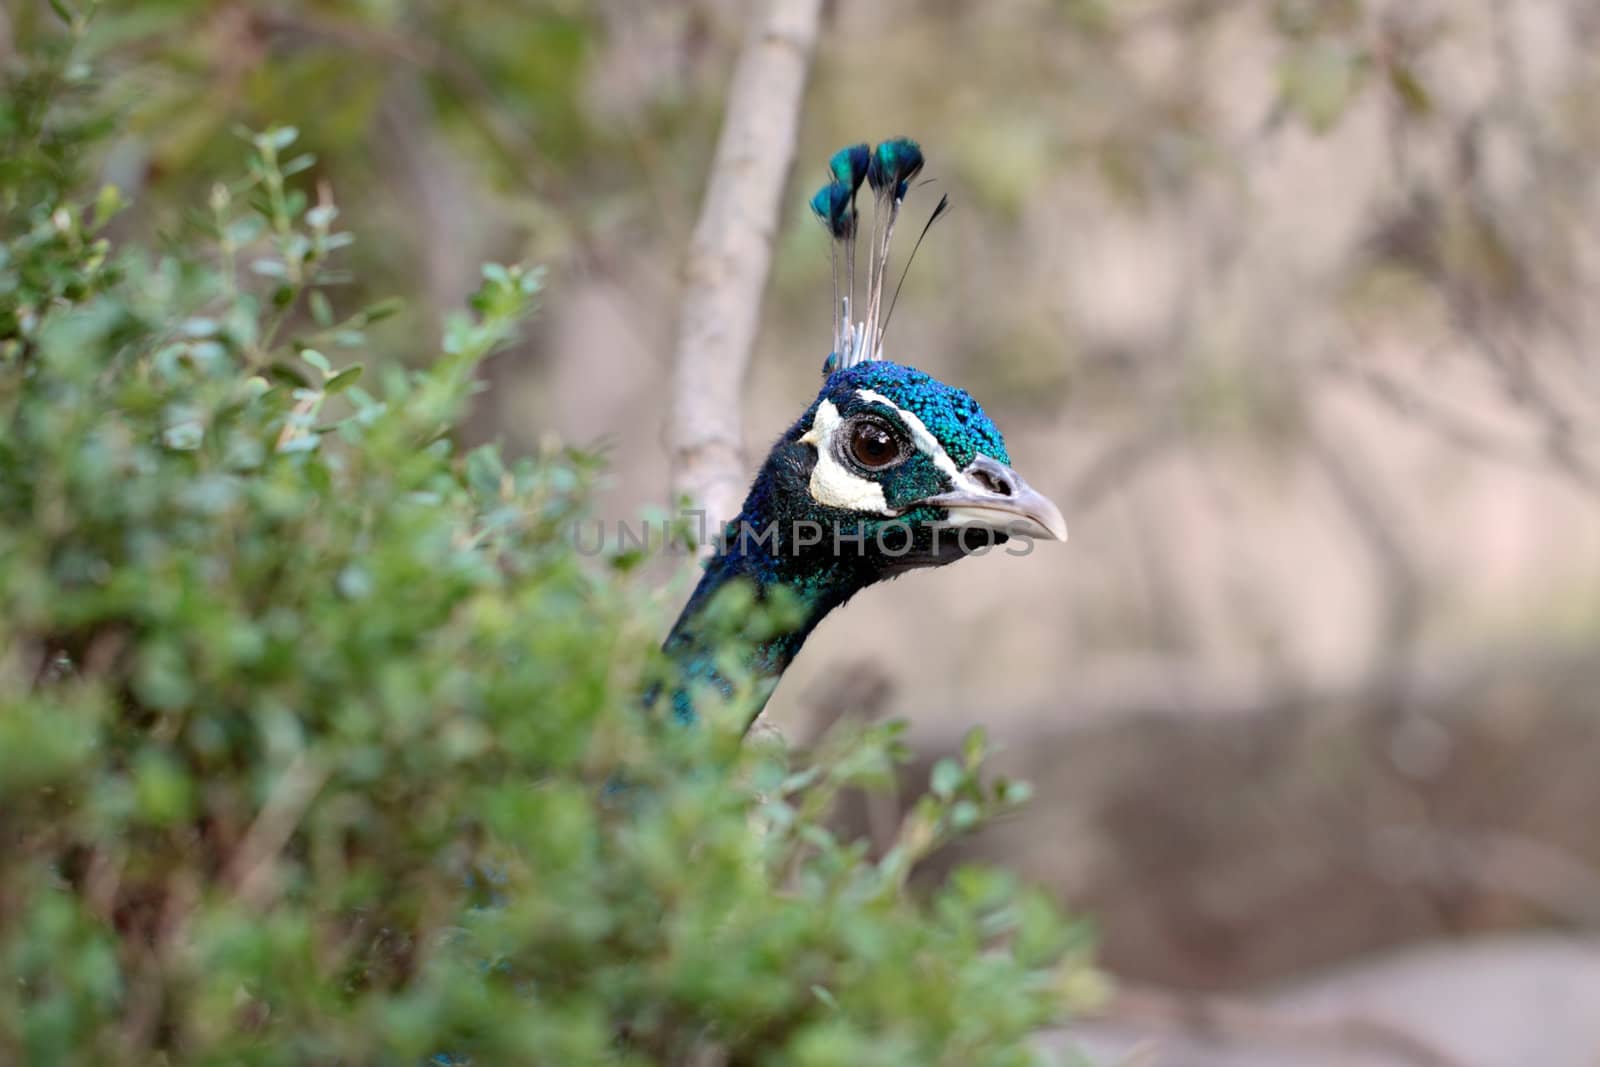 A peacock peeking from behind a bush